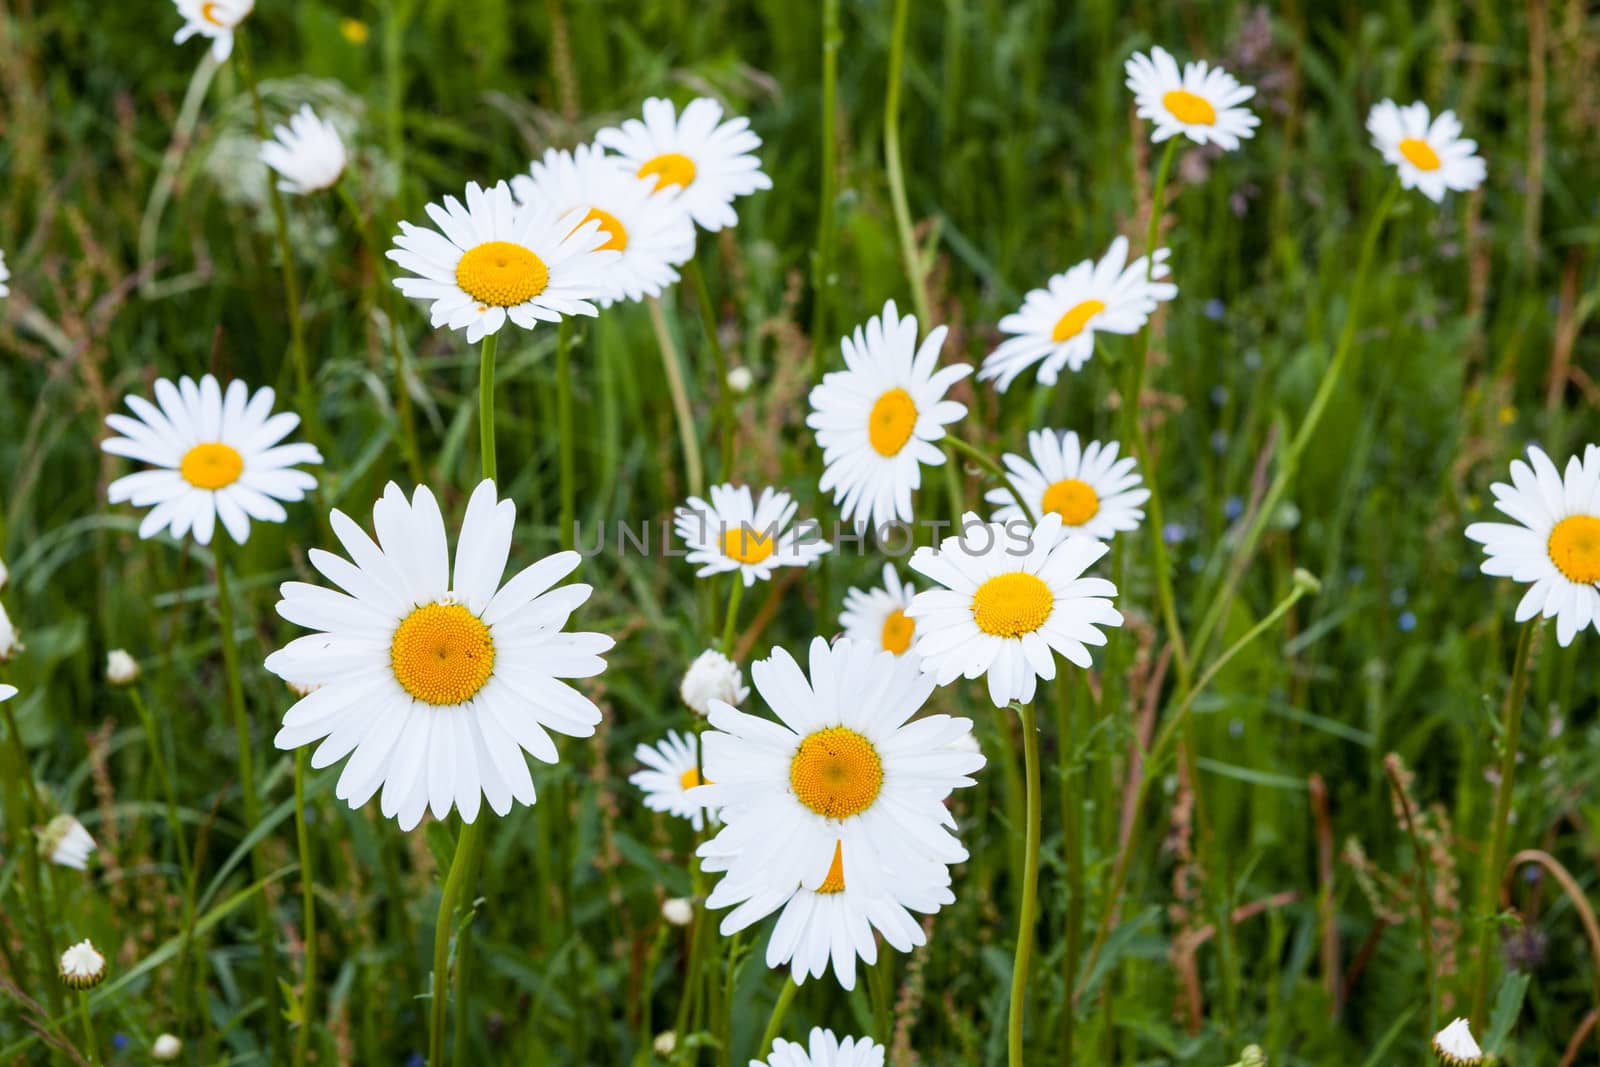 Group of daisy flowers in meadow by juhku